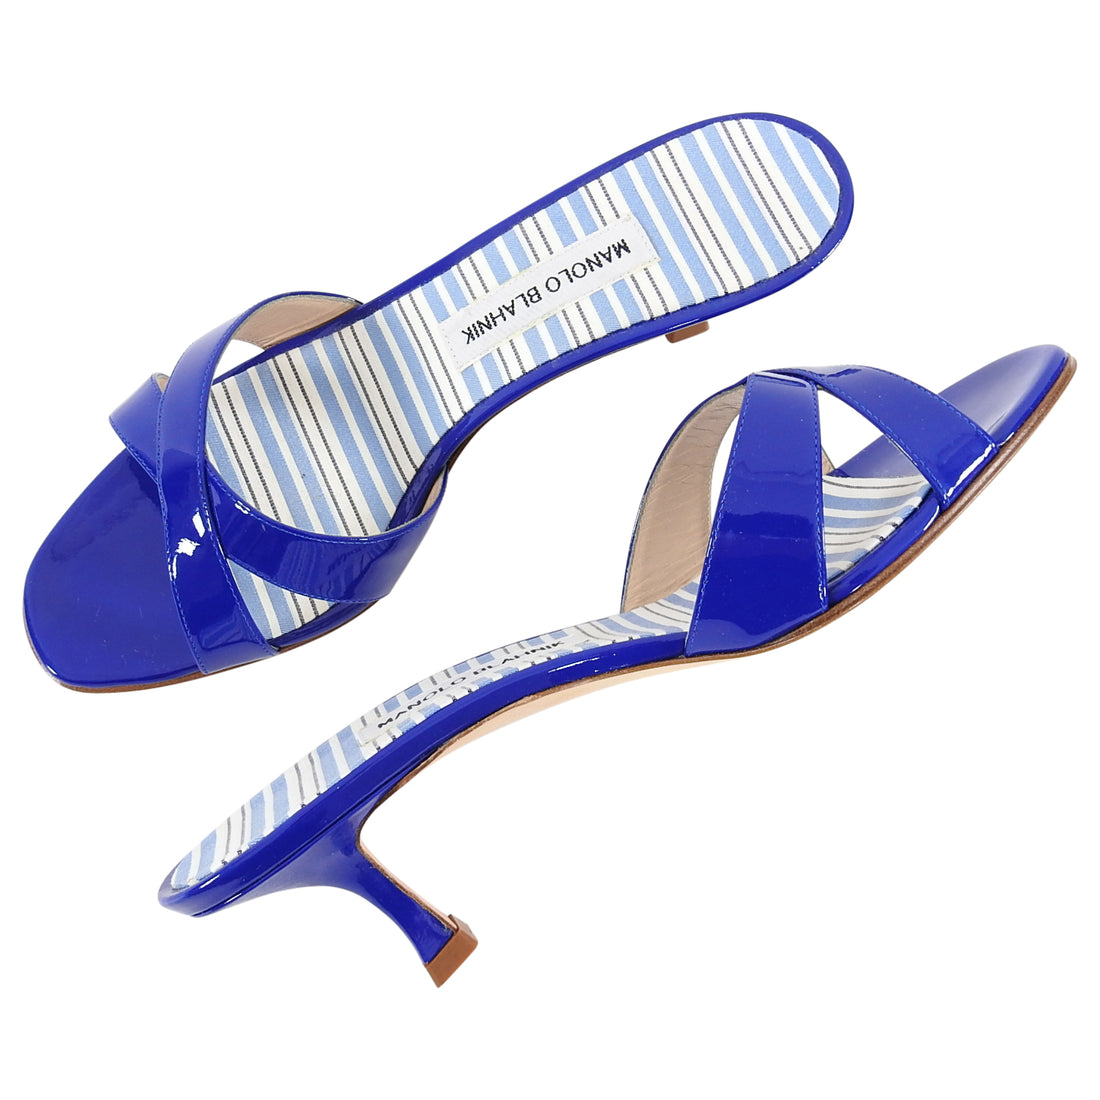 Manolo Blahnik Blue Patent Criss Cross Low Heel Sandals - 39 / 8.5